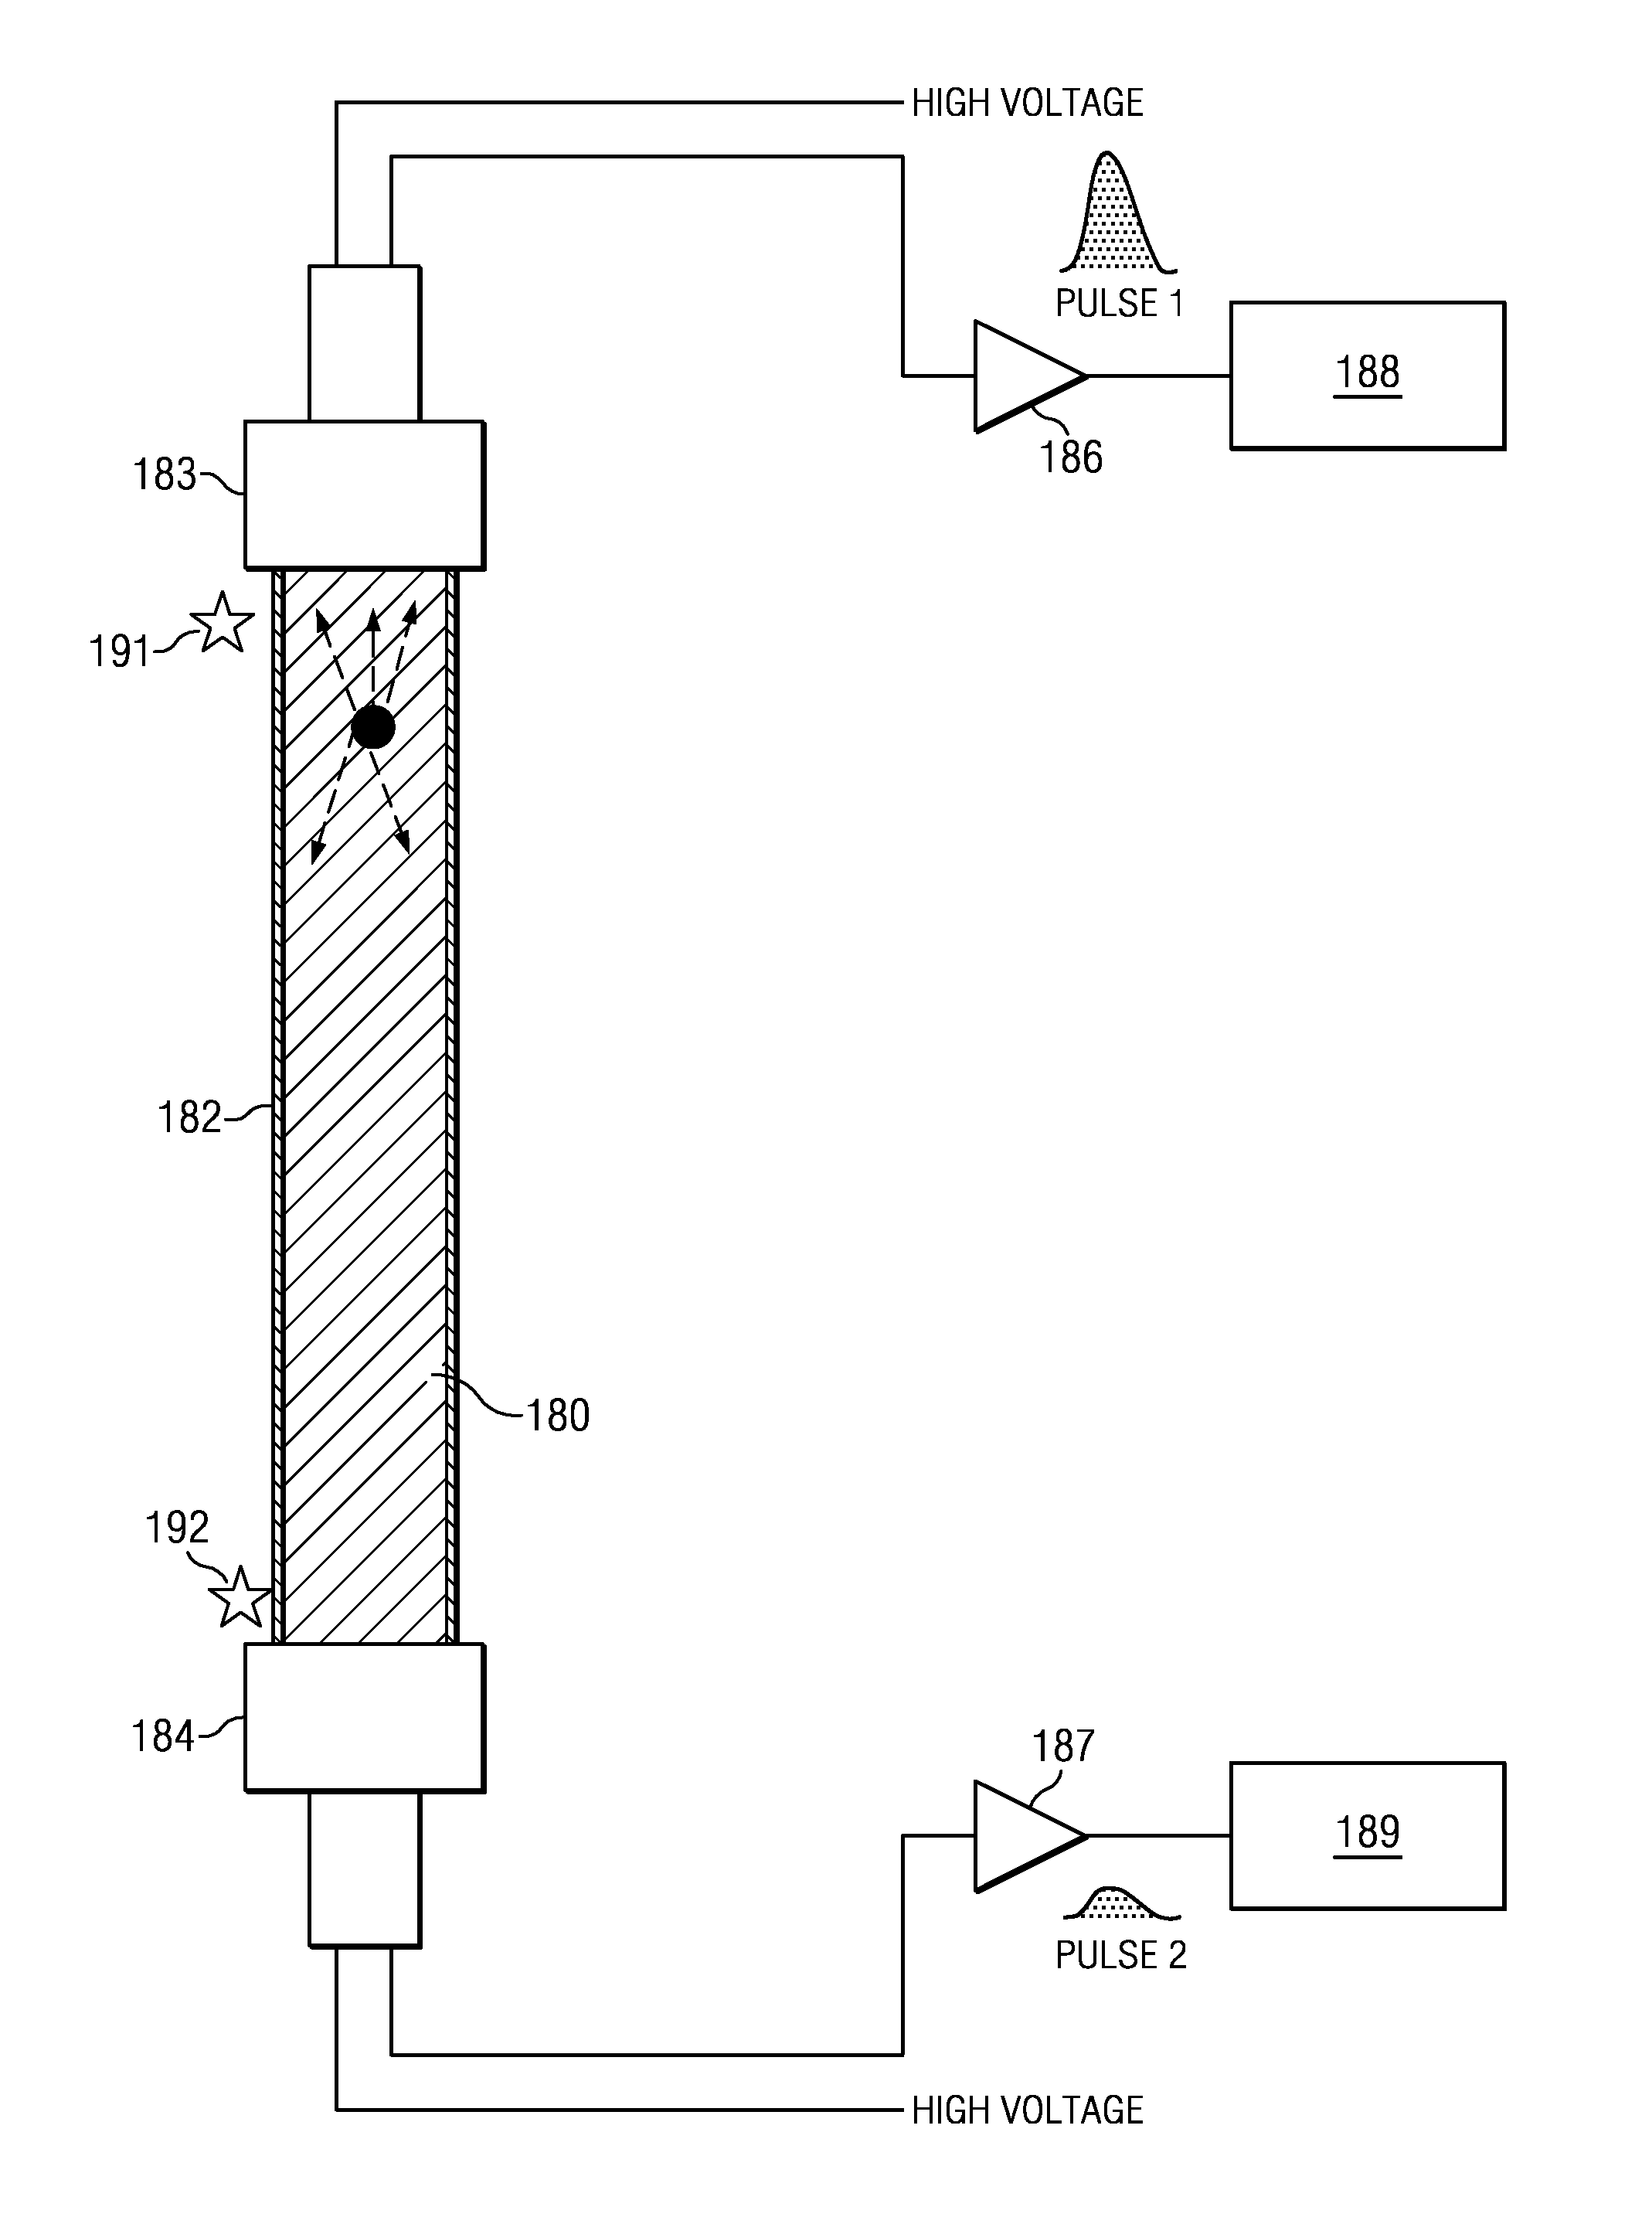 Method and Apparatus for Neutron Logging Using a Position Sensitive Neutron Detector